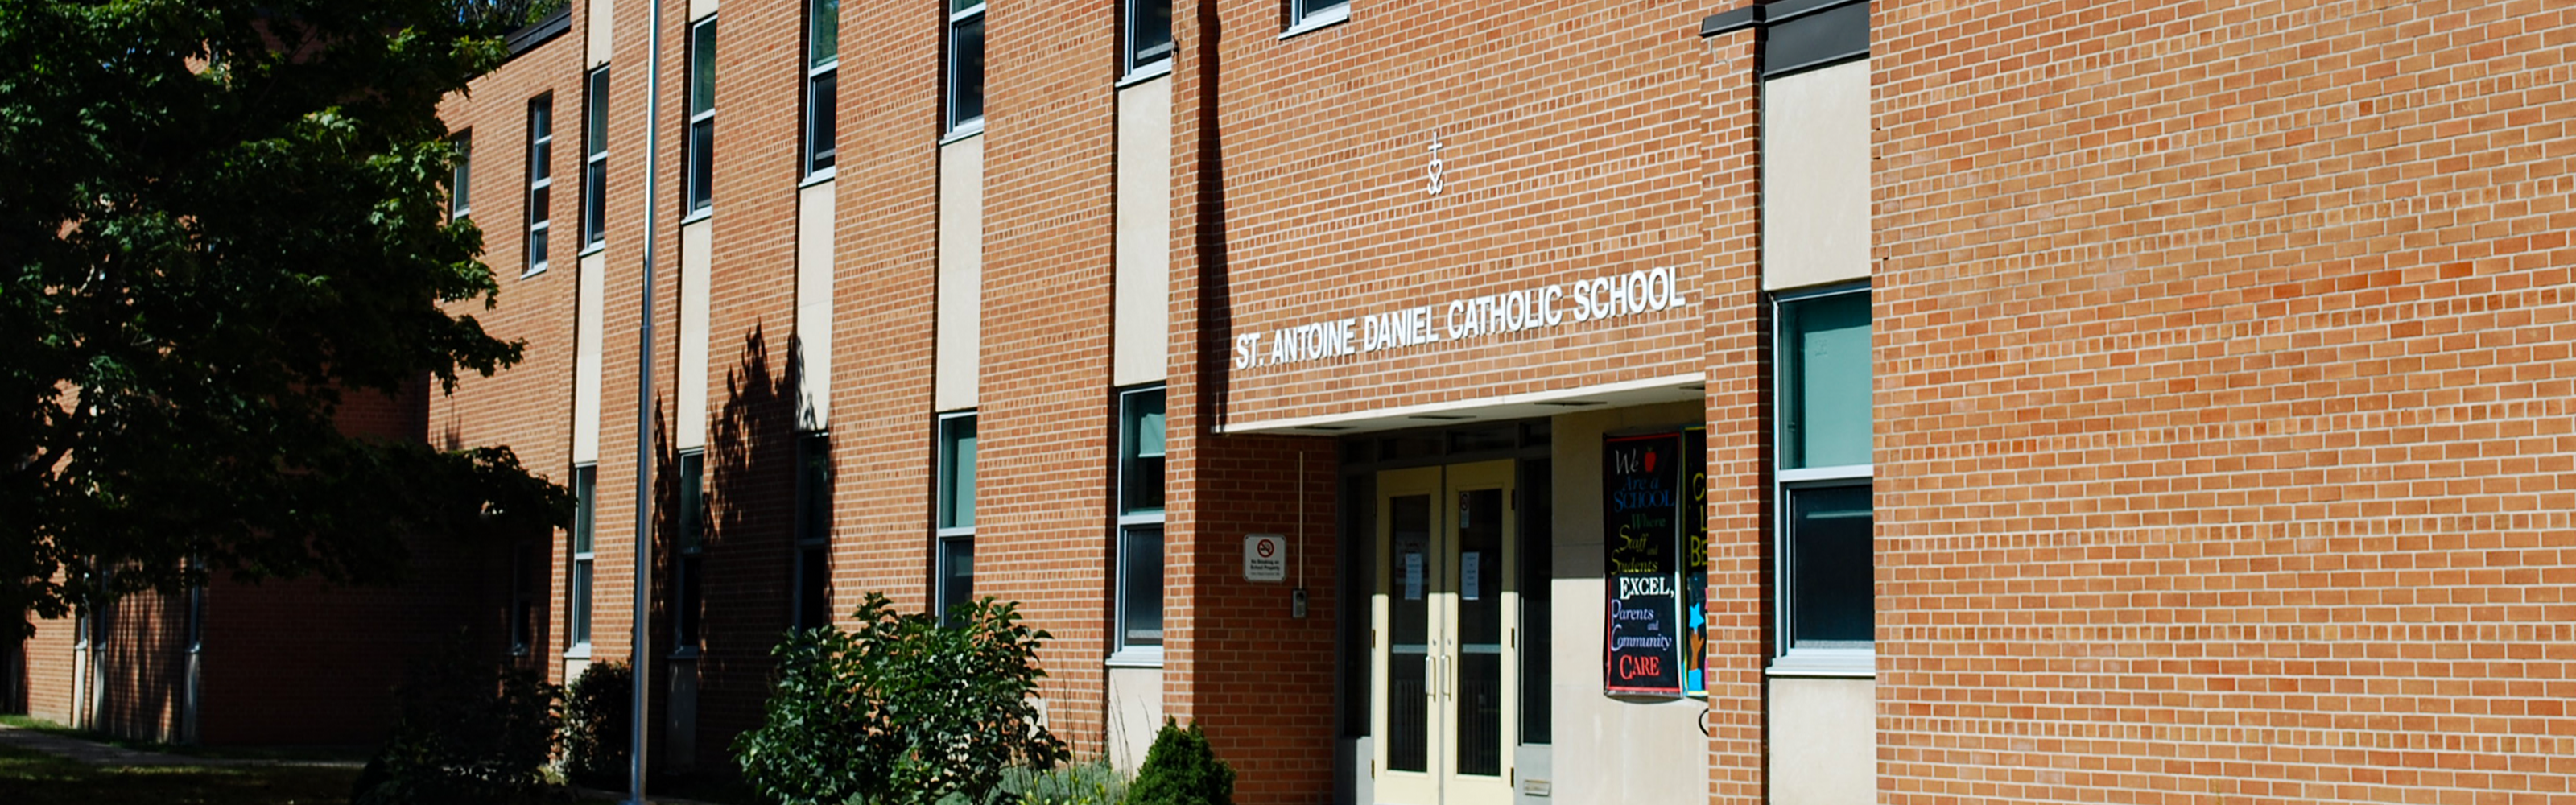 The front of the St. Antoine Daniel Catholic School building.